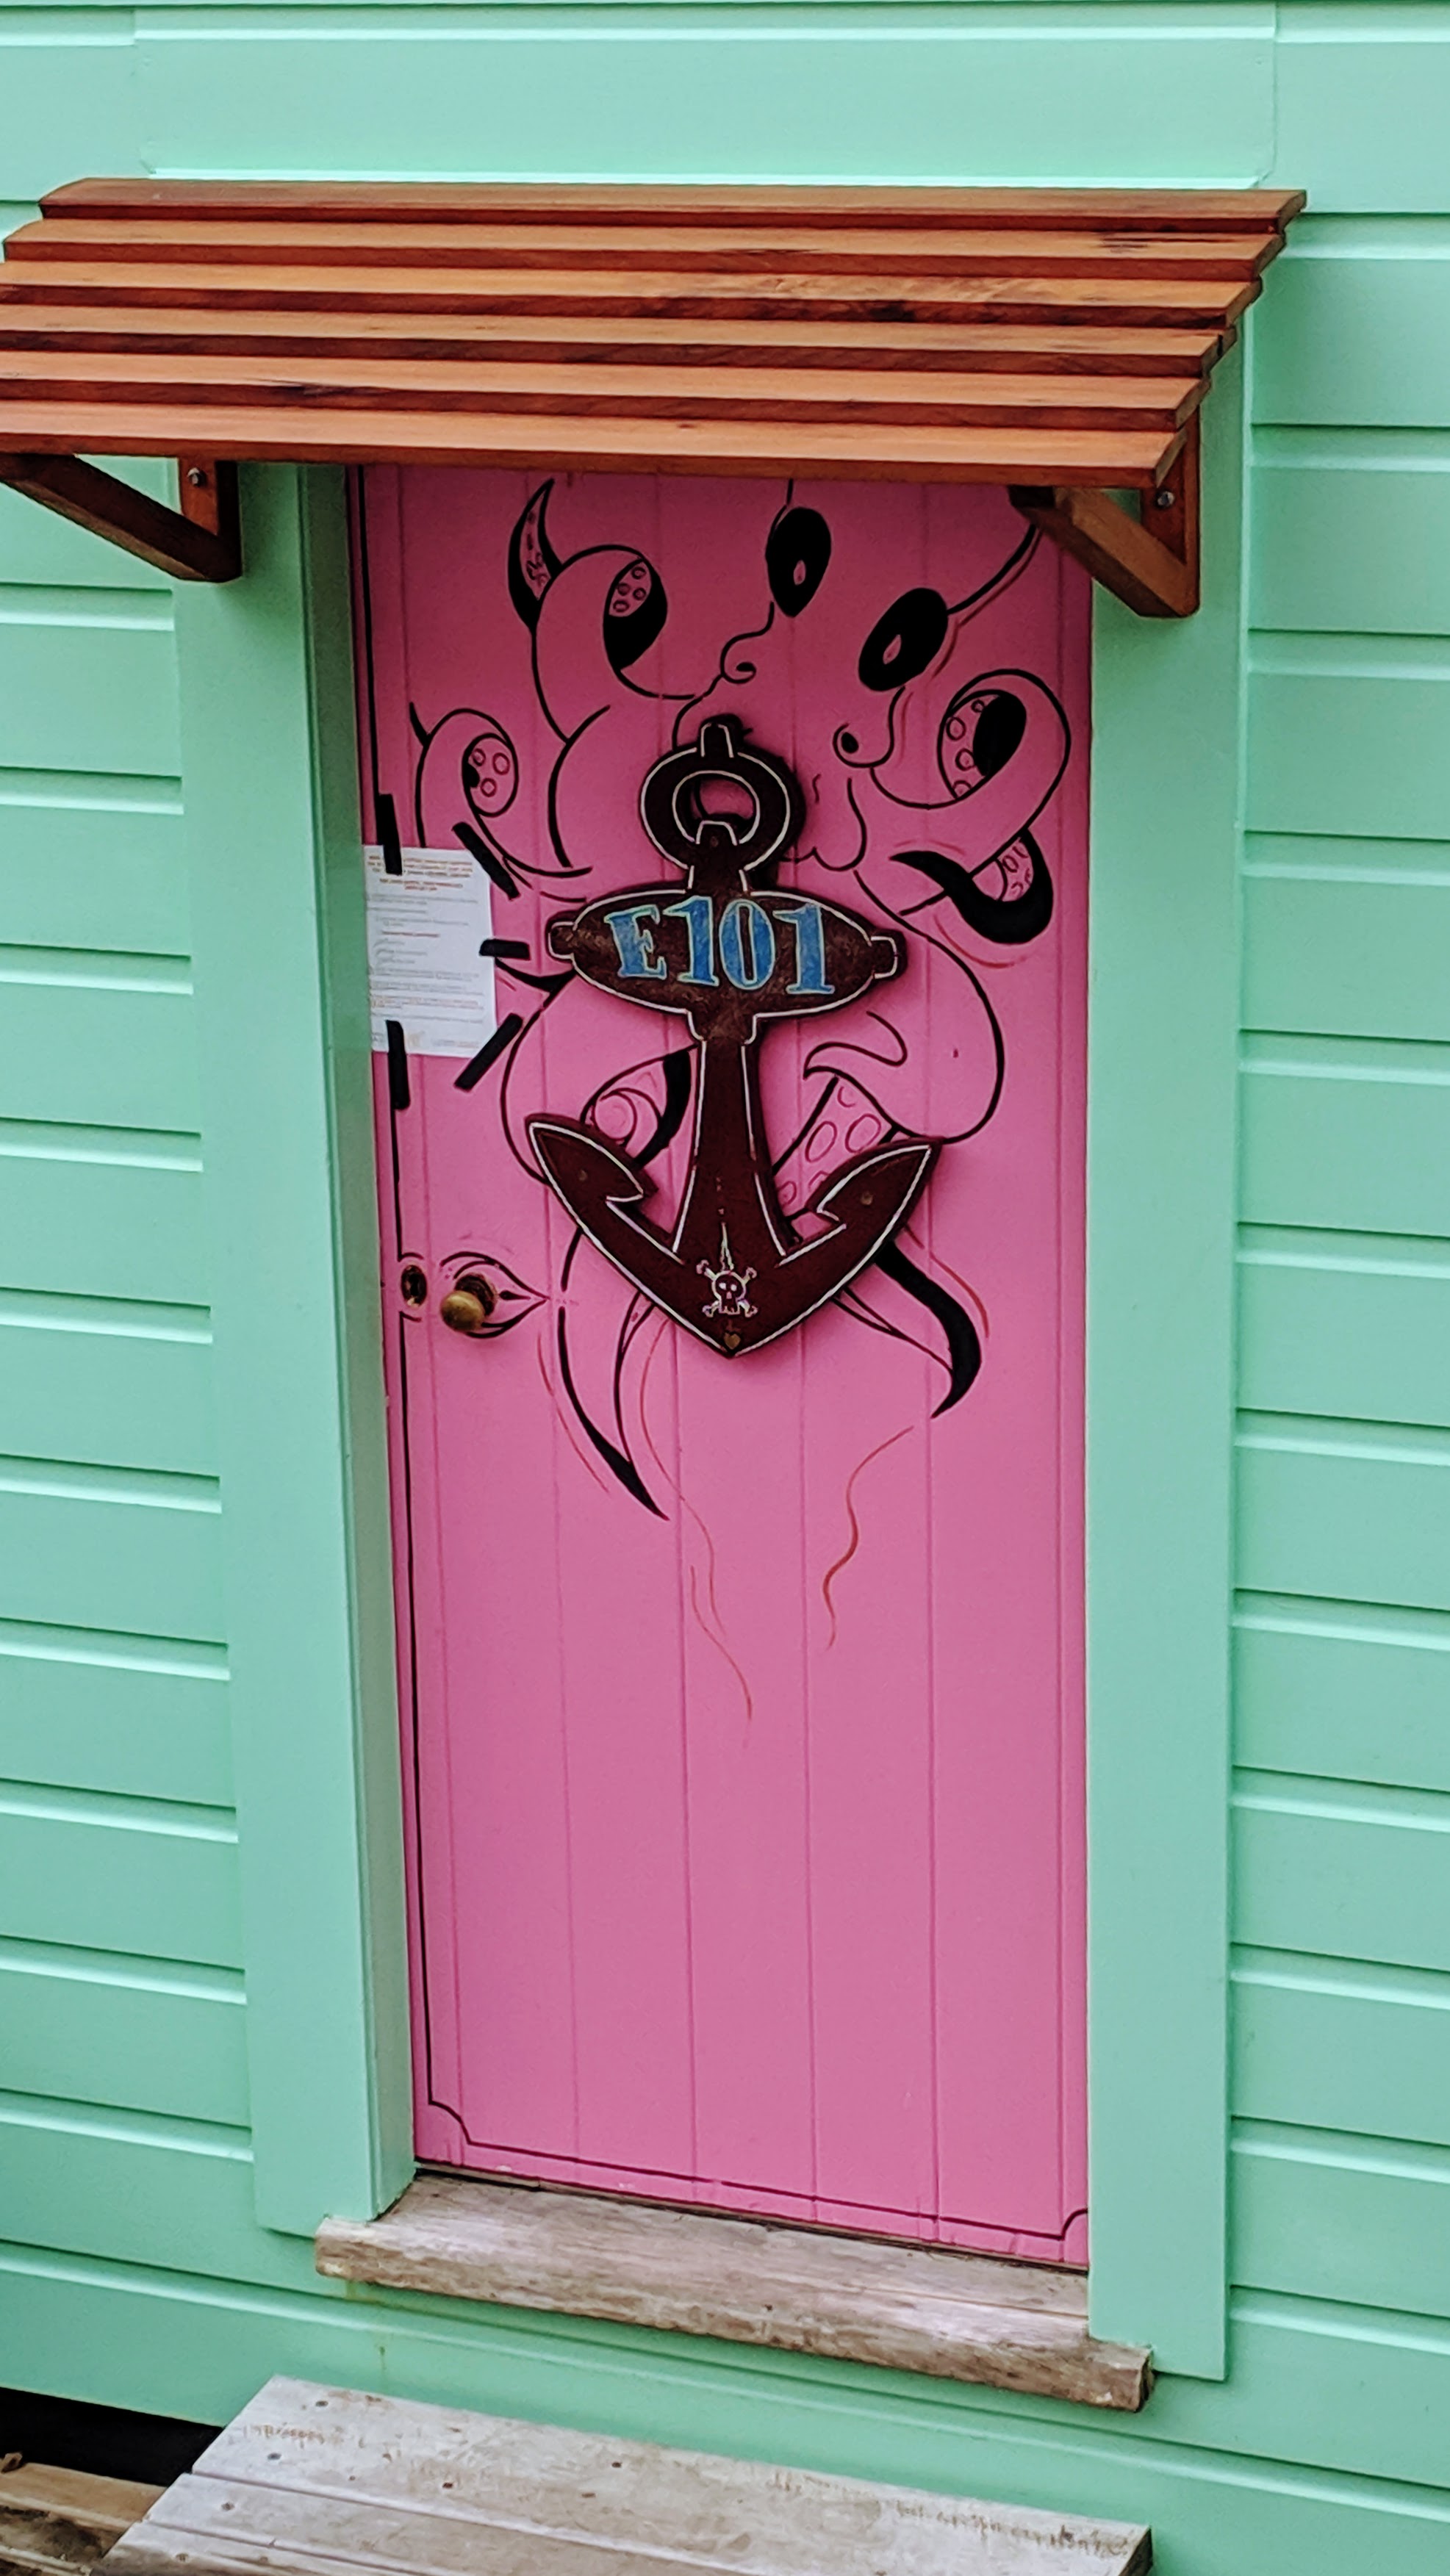 Pink boatshed door against a lime green background